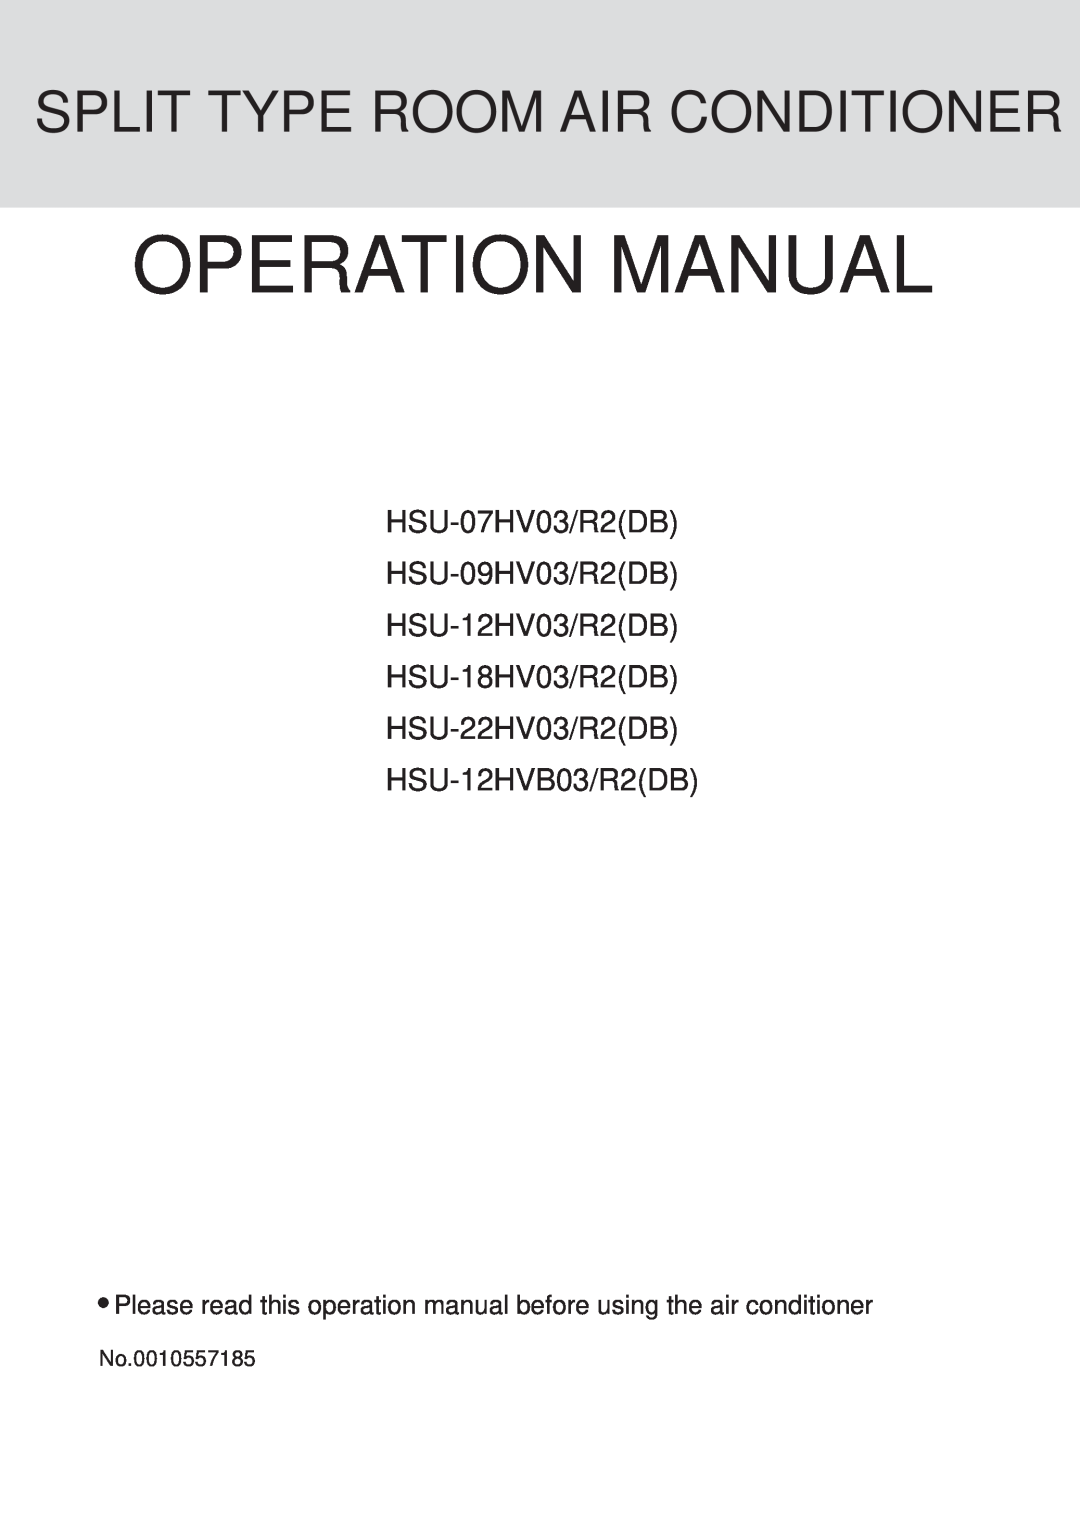 Haier HSU-07HV03, HSU-09HV03, HSU-12HV03, HSU-18HV03, HSU-22HV03, HSU-12HVB03 operation manual Operation Manual 